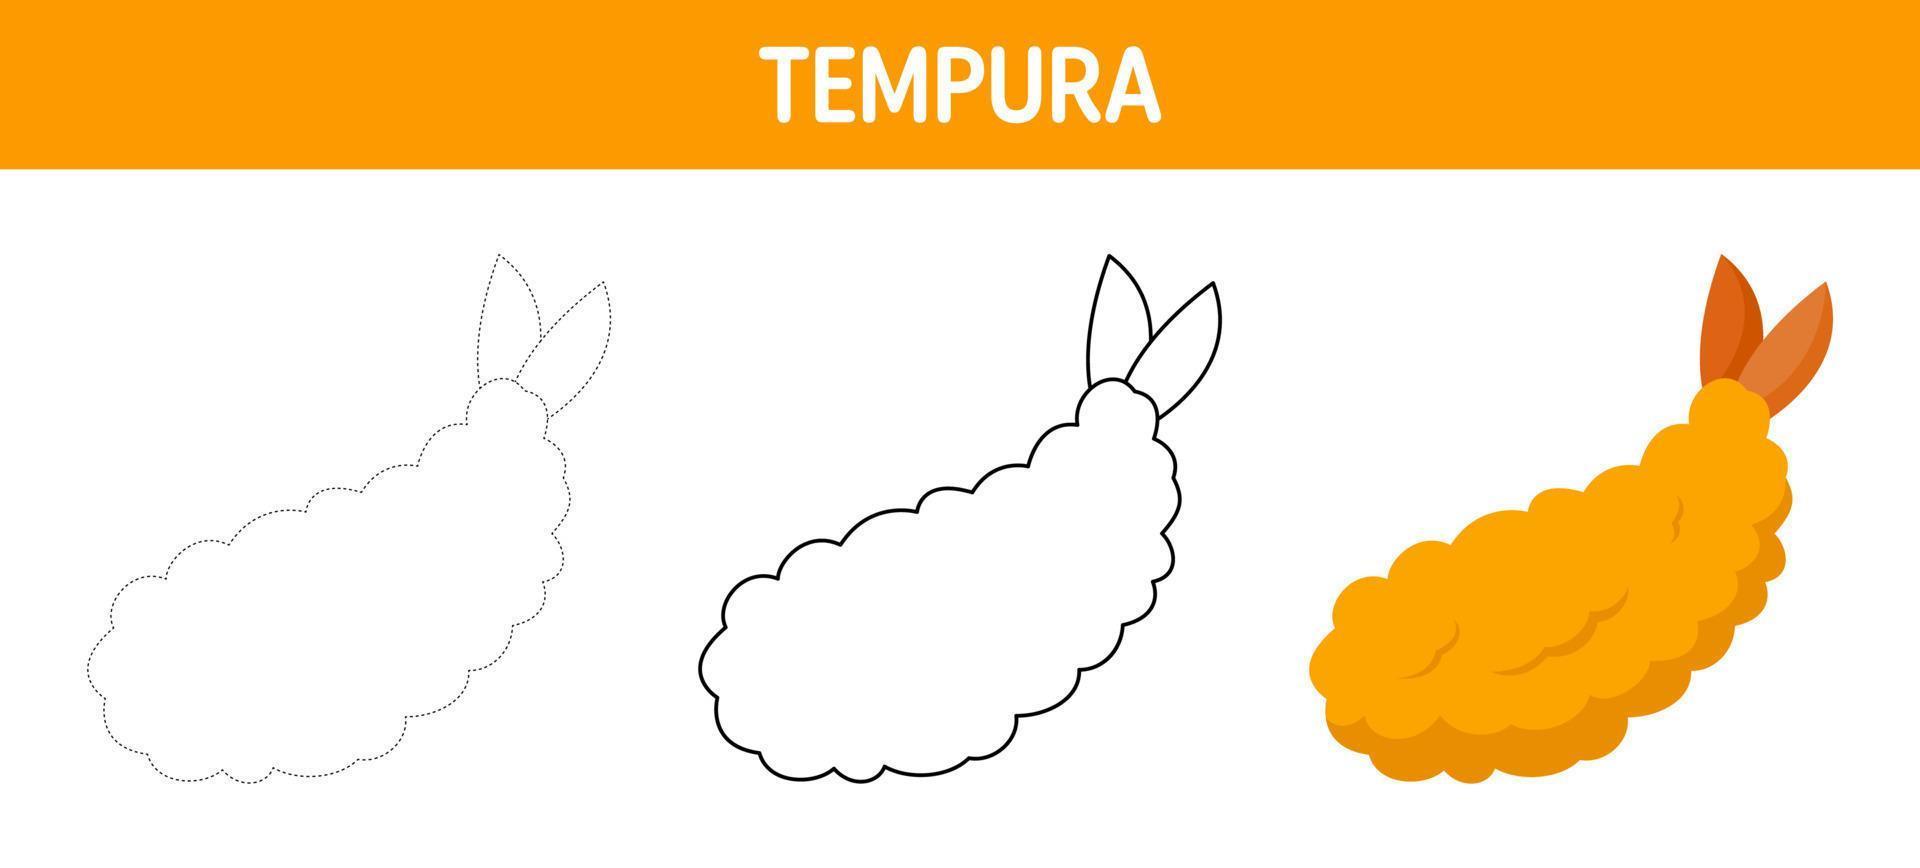 Tempura tracing and coloring worksheet for kids vector